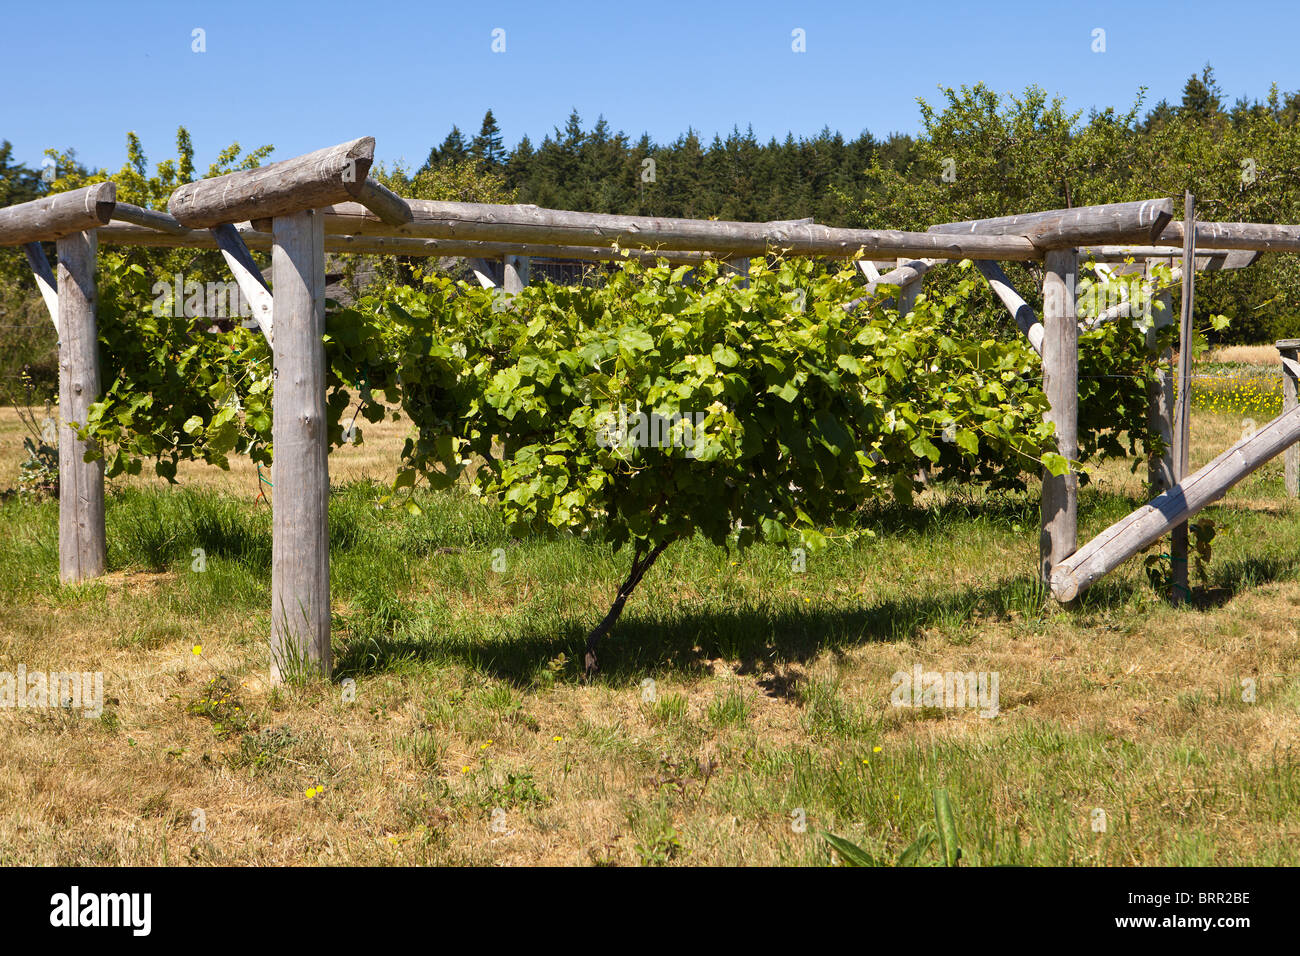 Grape vine trellis hi-res stock photography and images - Alamy